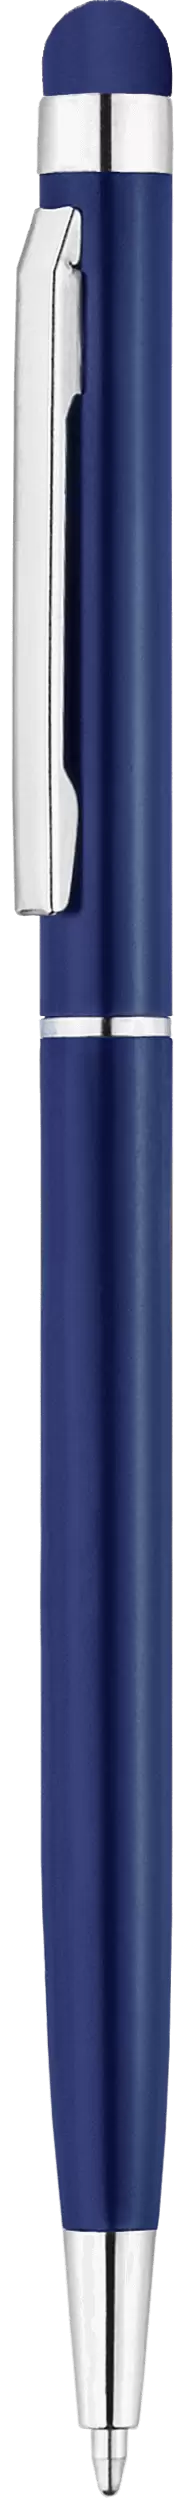 Ручка KENO Темно-синяя 1117-14